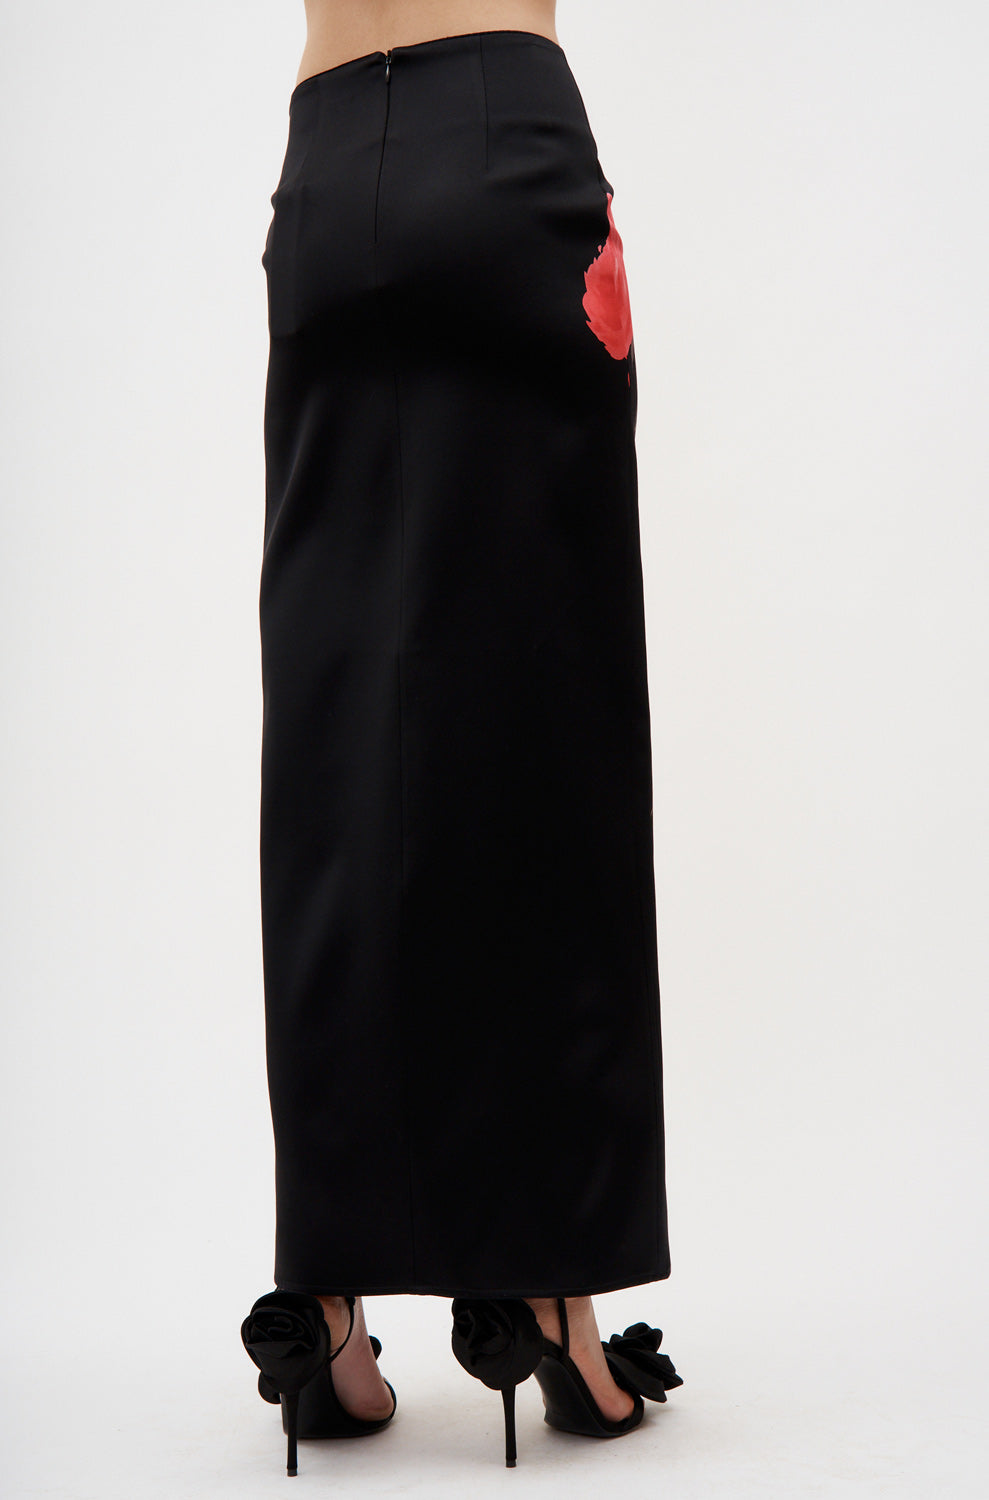 Rosette Cutout Black Maxi Skirt